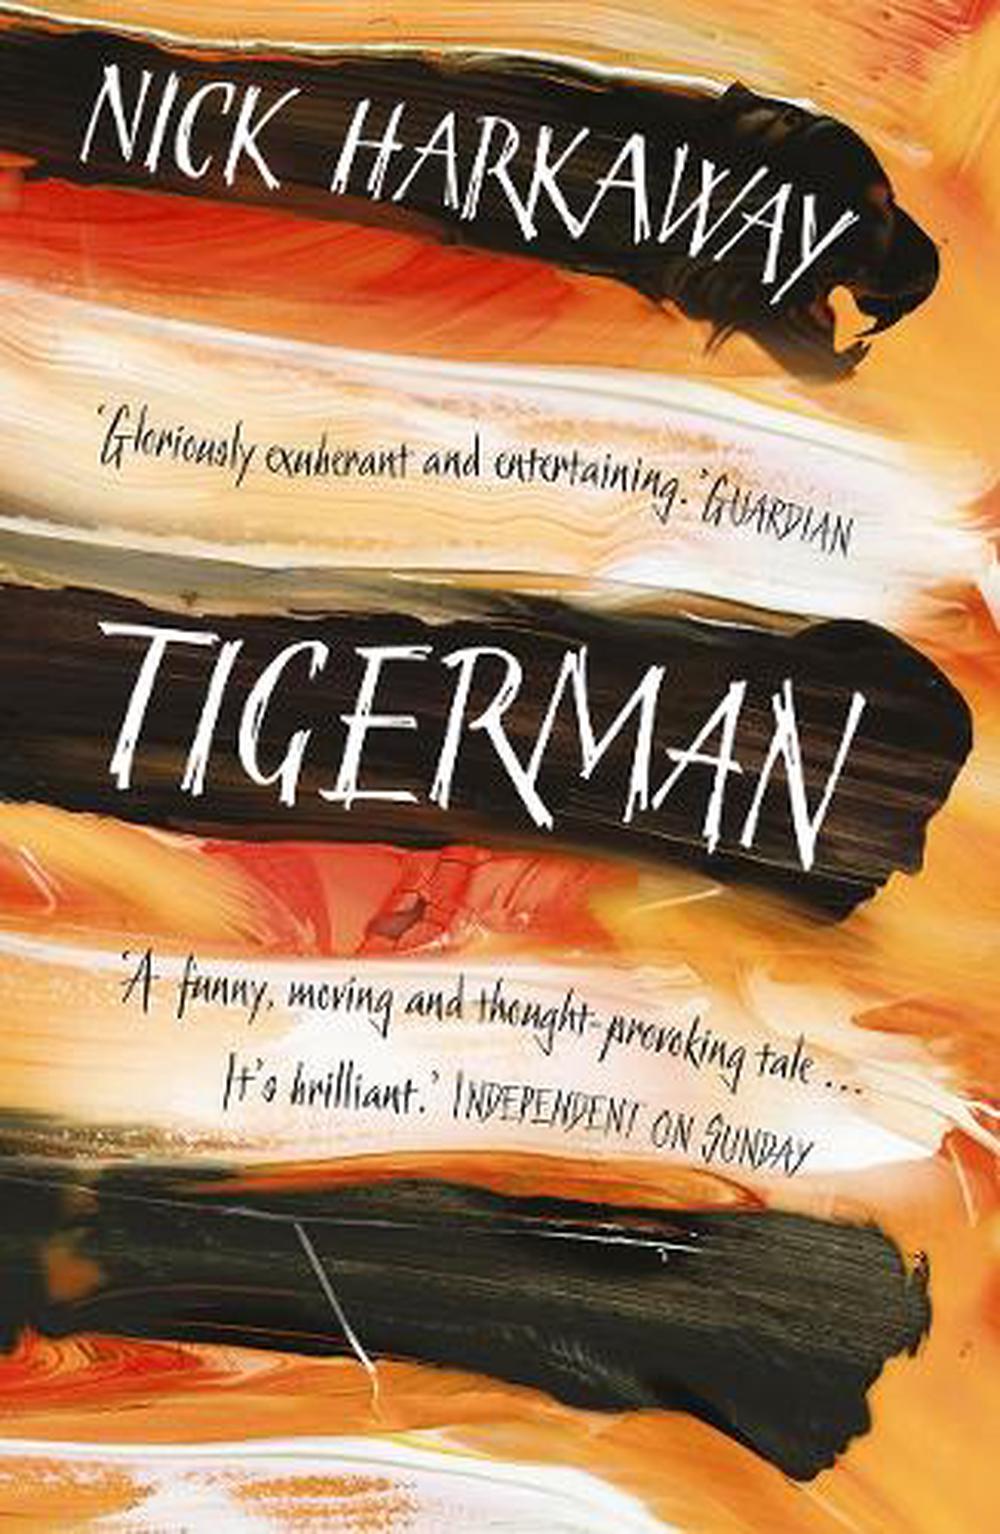 Tigerman (2014, Penguin Random House)